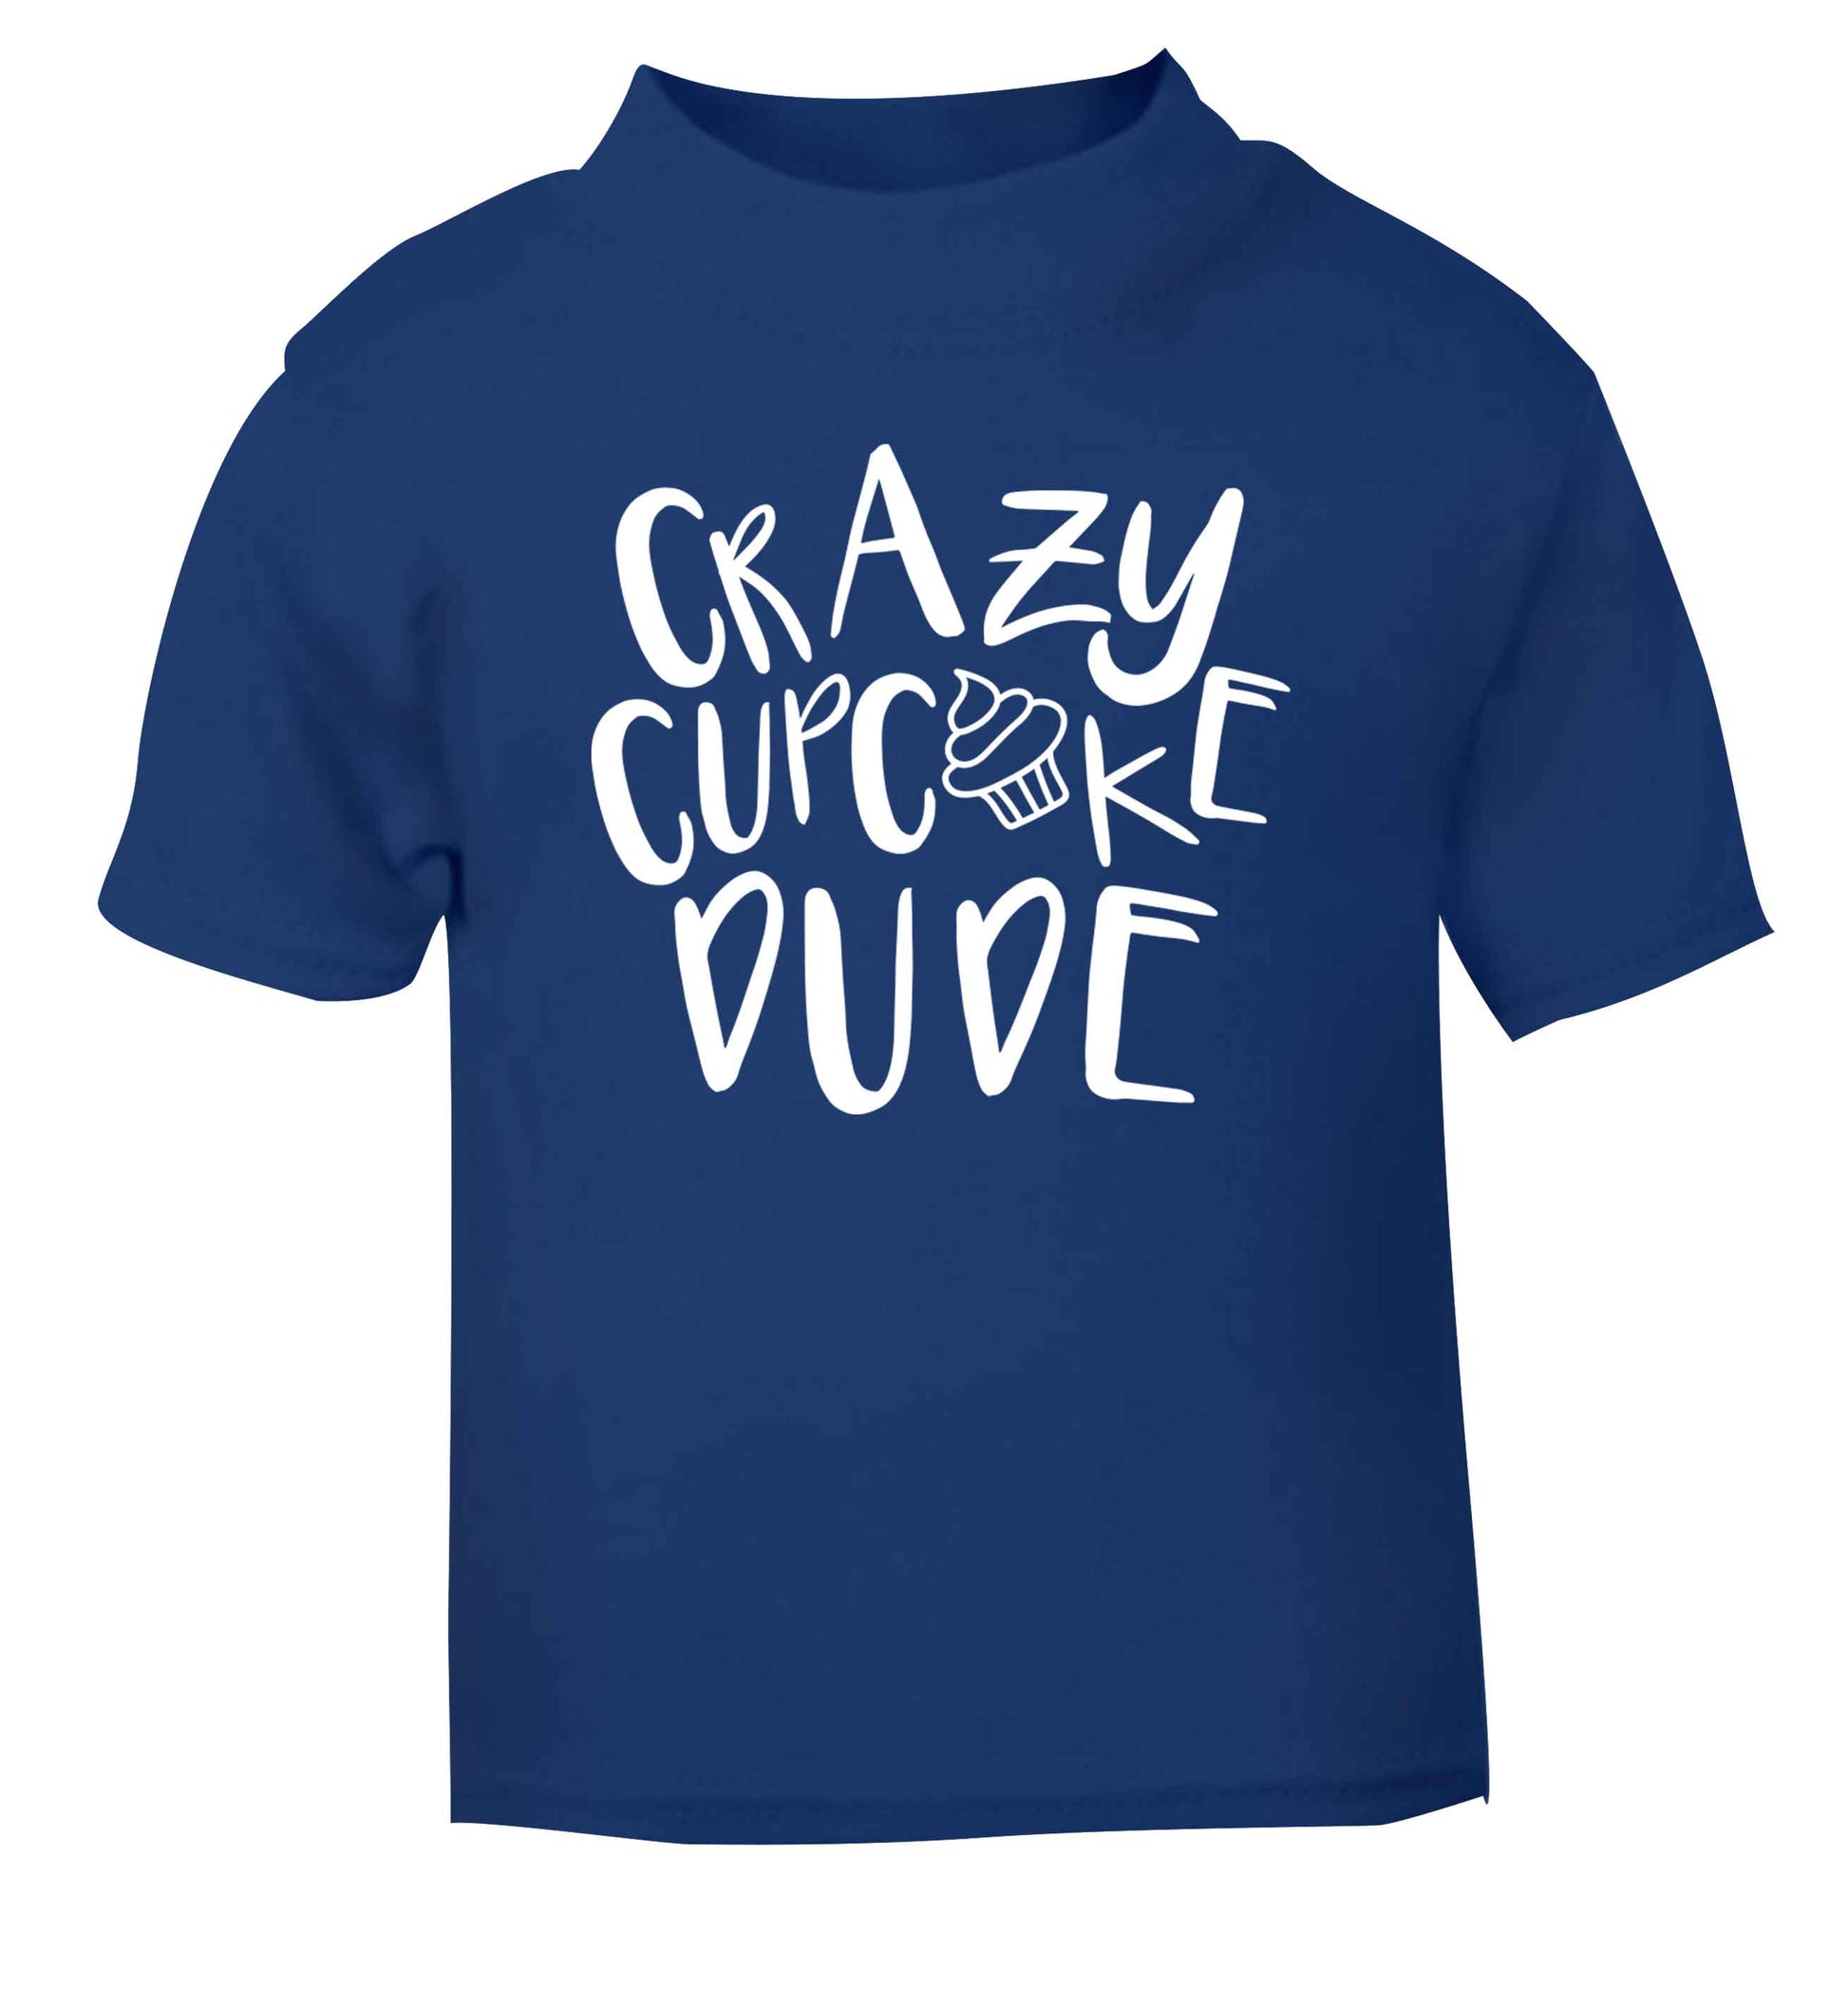 Crazy cupcake dude blue Baby Toddler Tshirt 2 Years